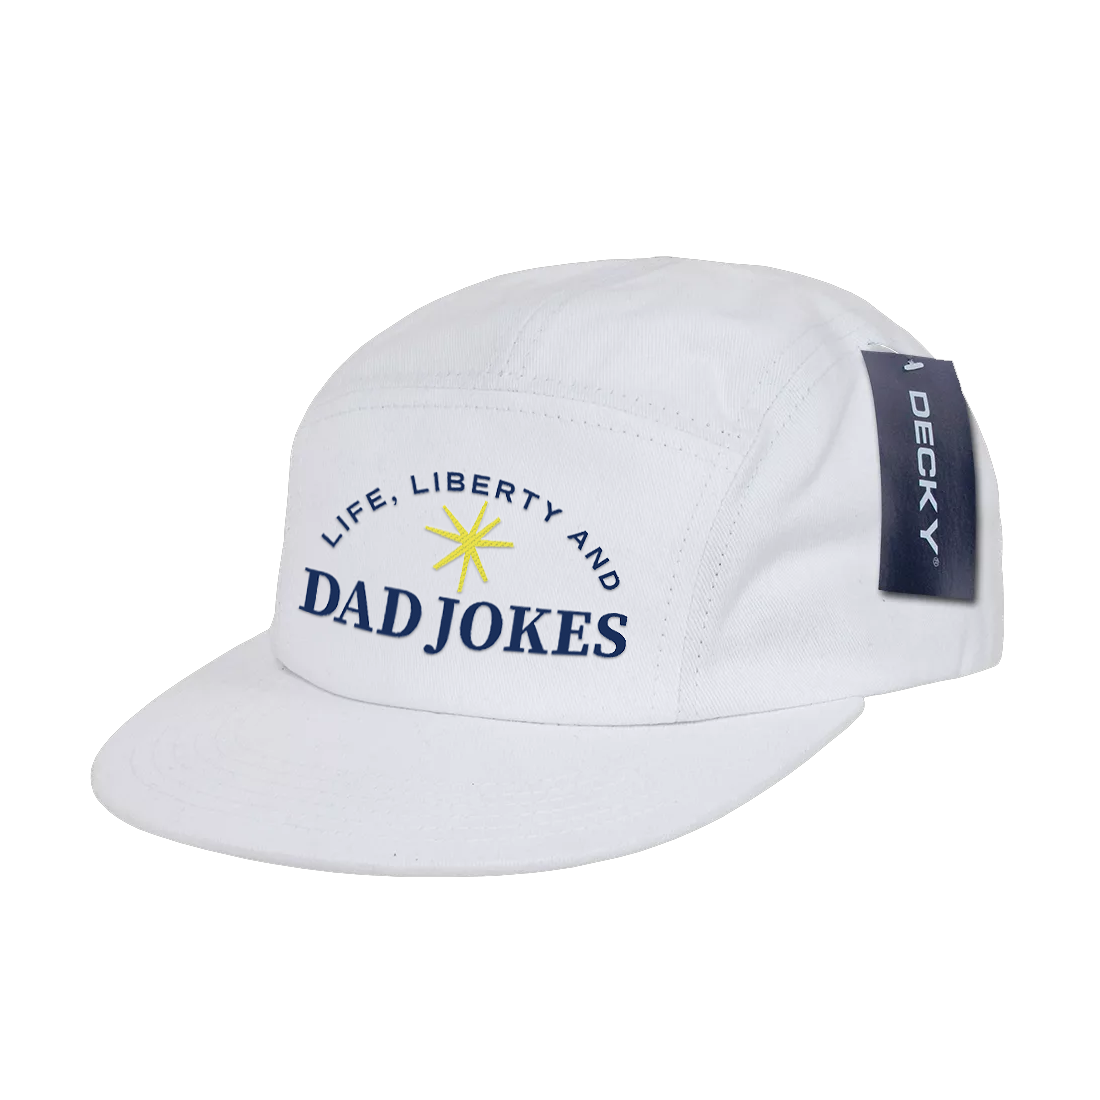 Life, Liberty And Dad Jokes Hat